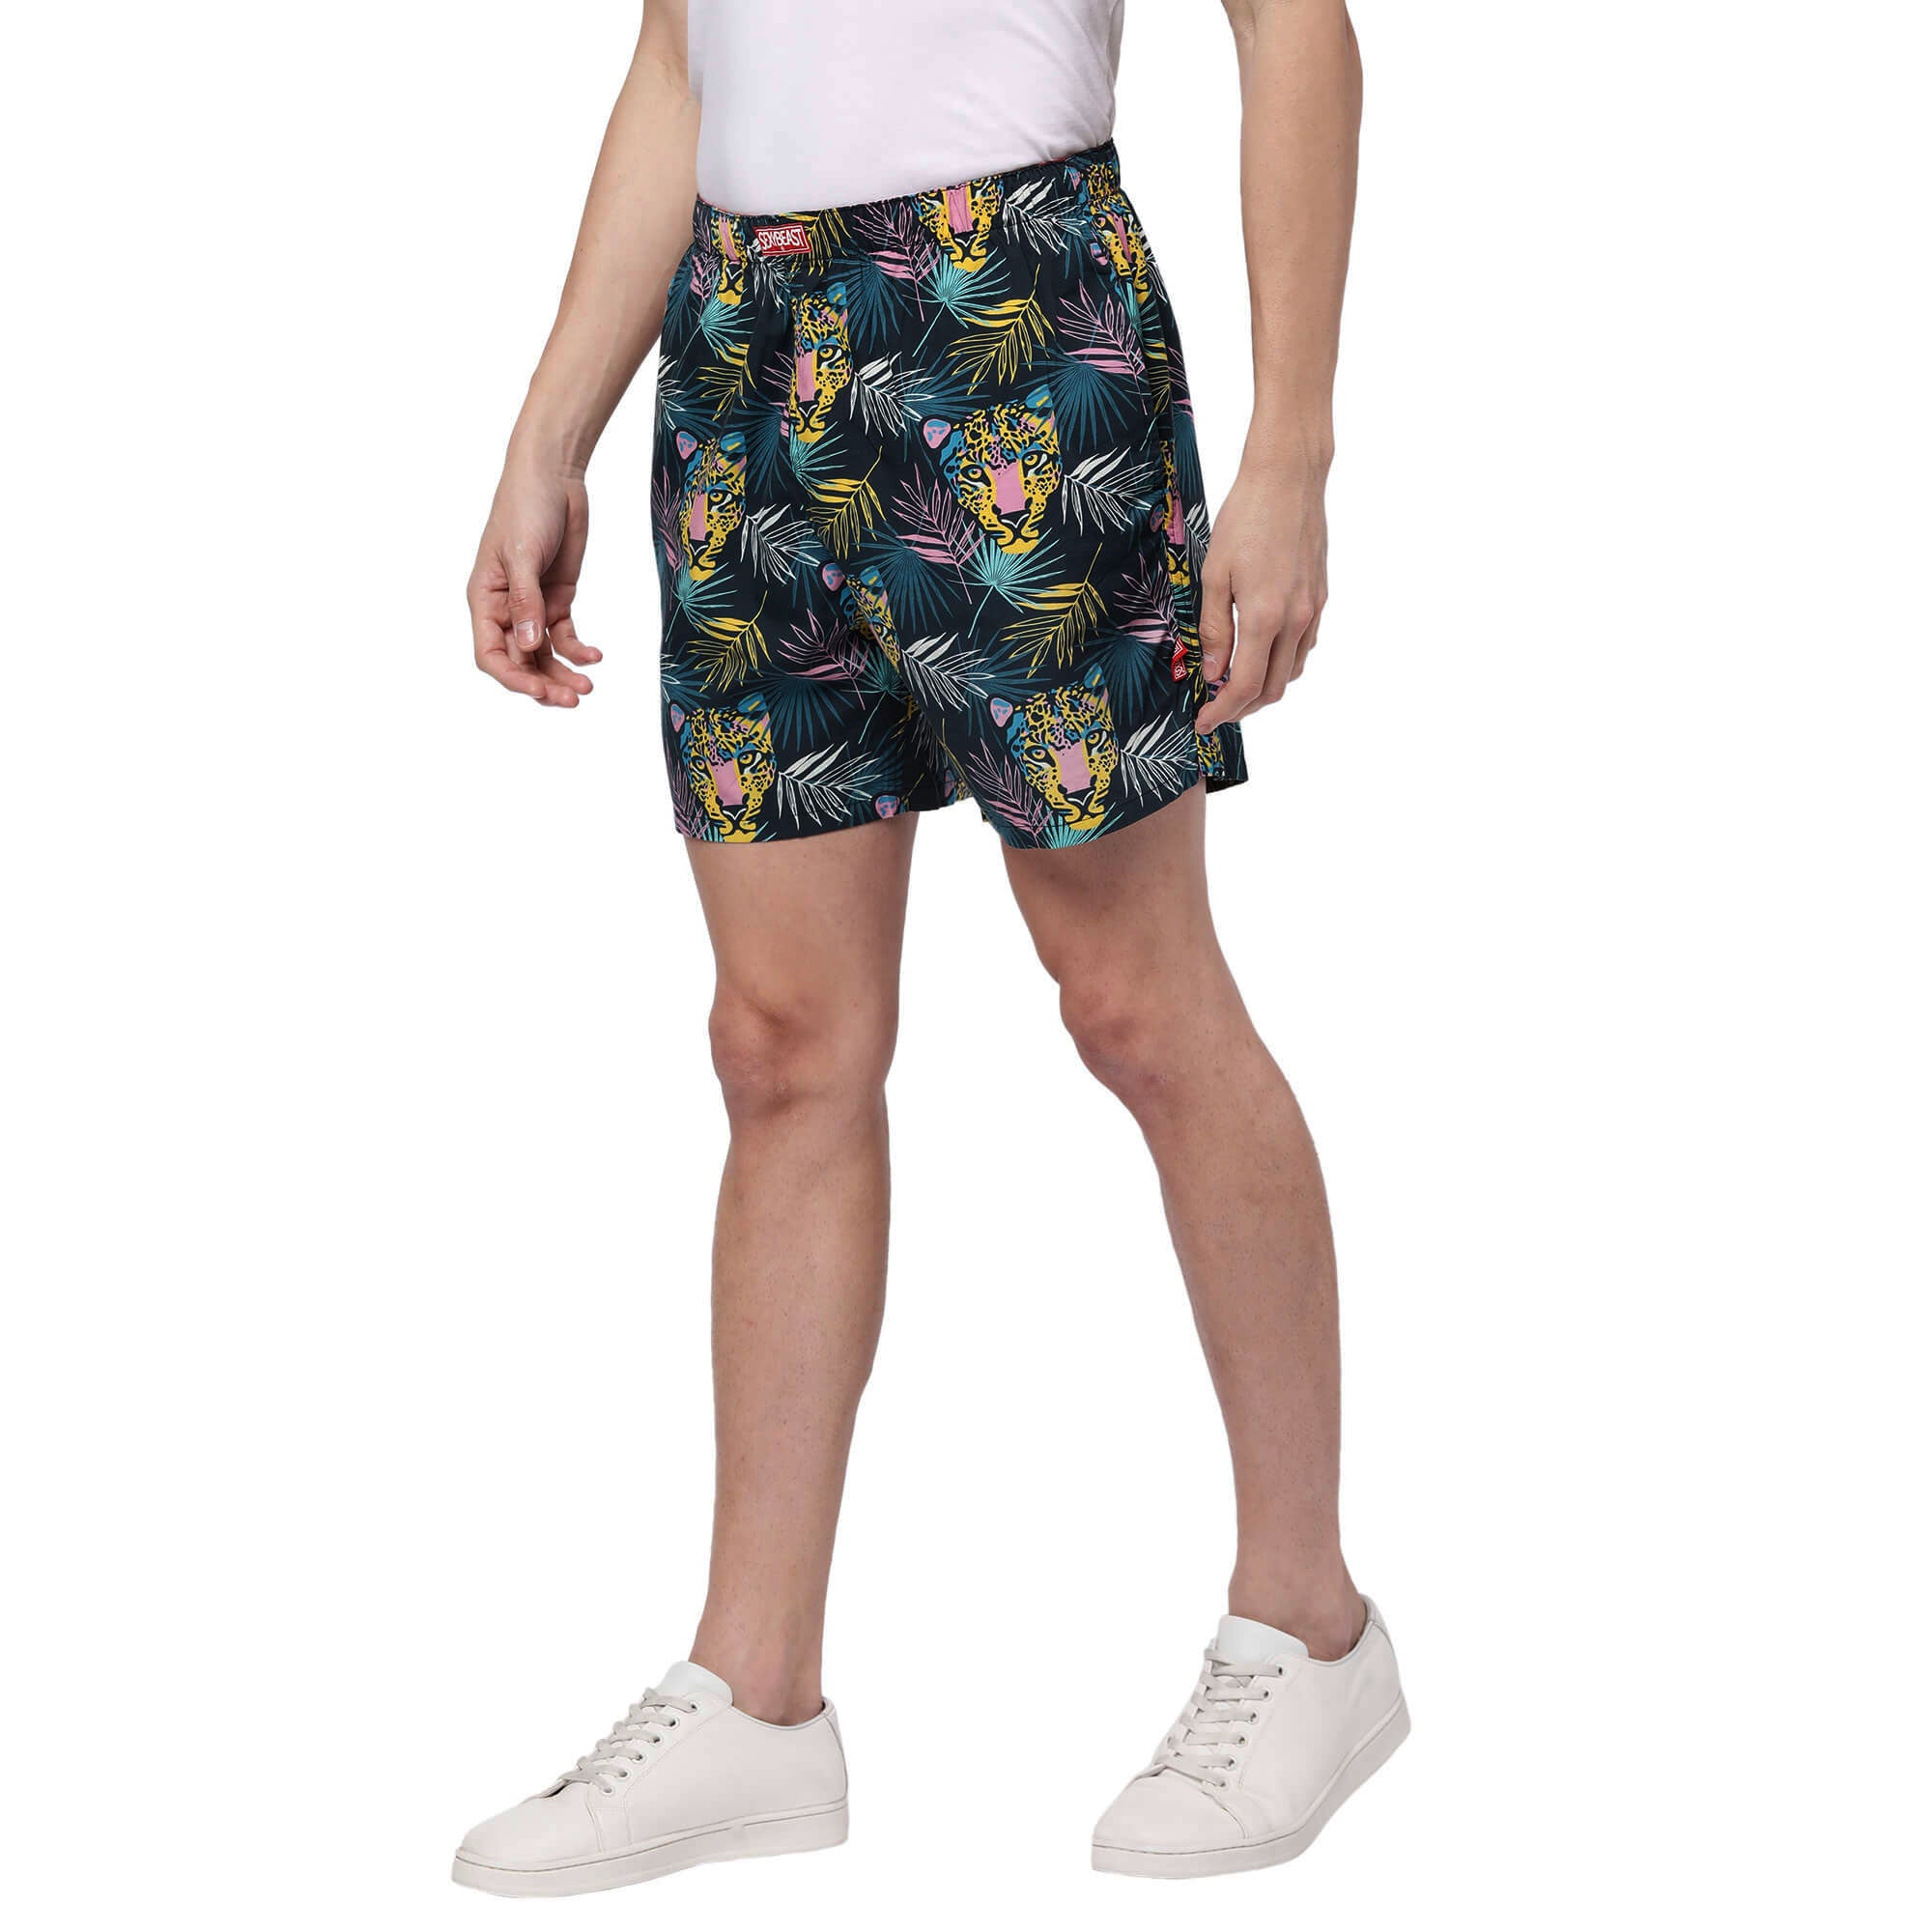 Boxer Shorts For Men